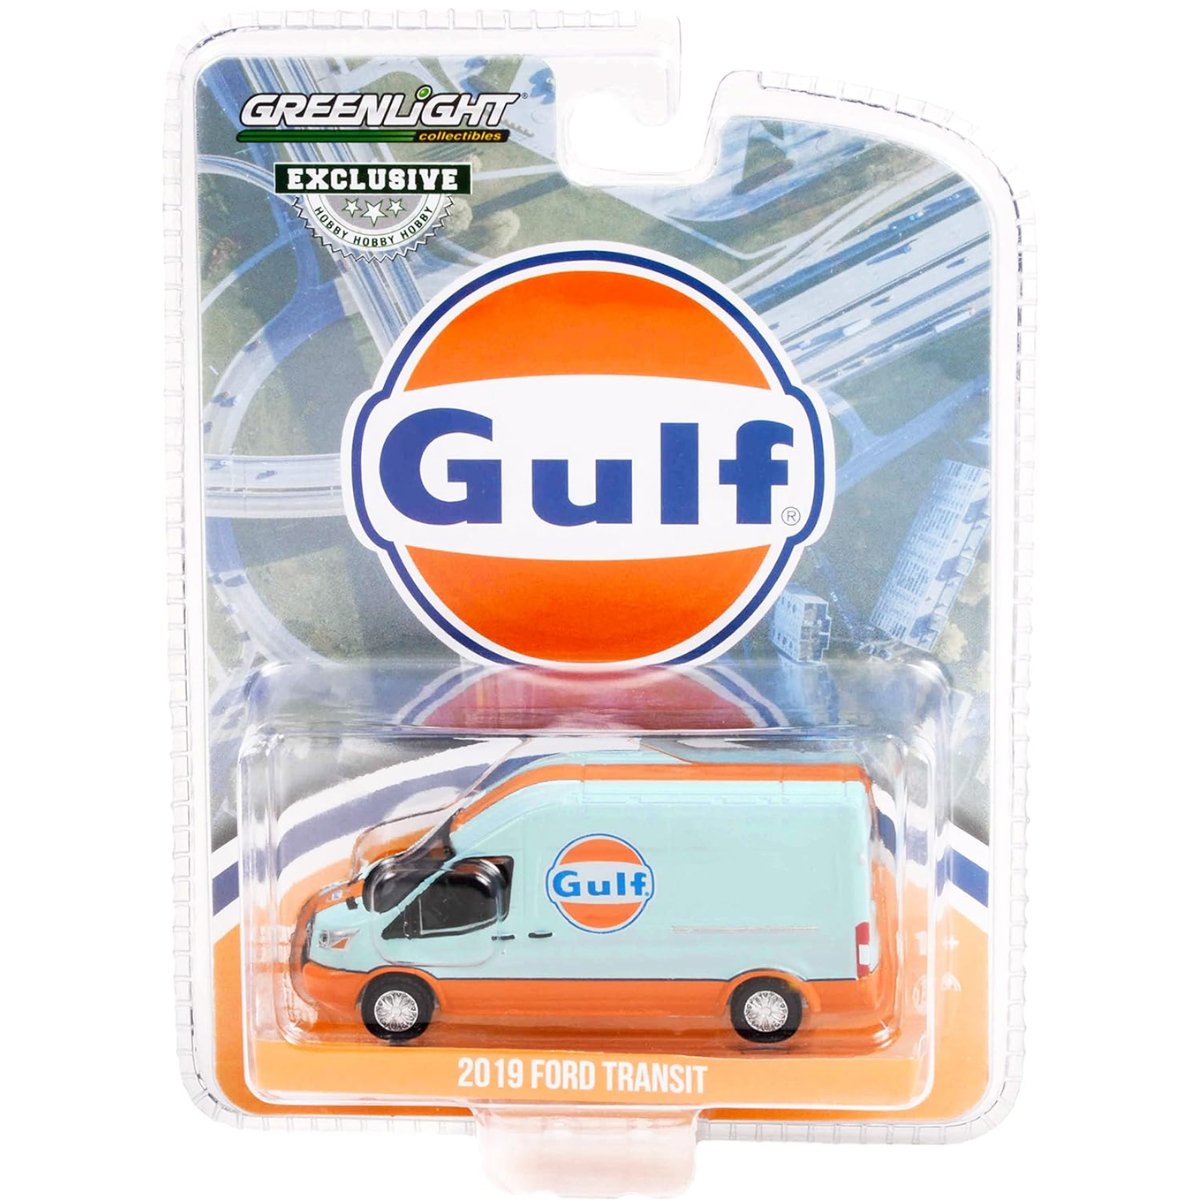 Greenlight 2019 Ford Transit Gulf - 1:64 Scale